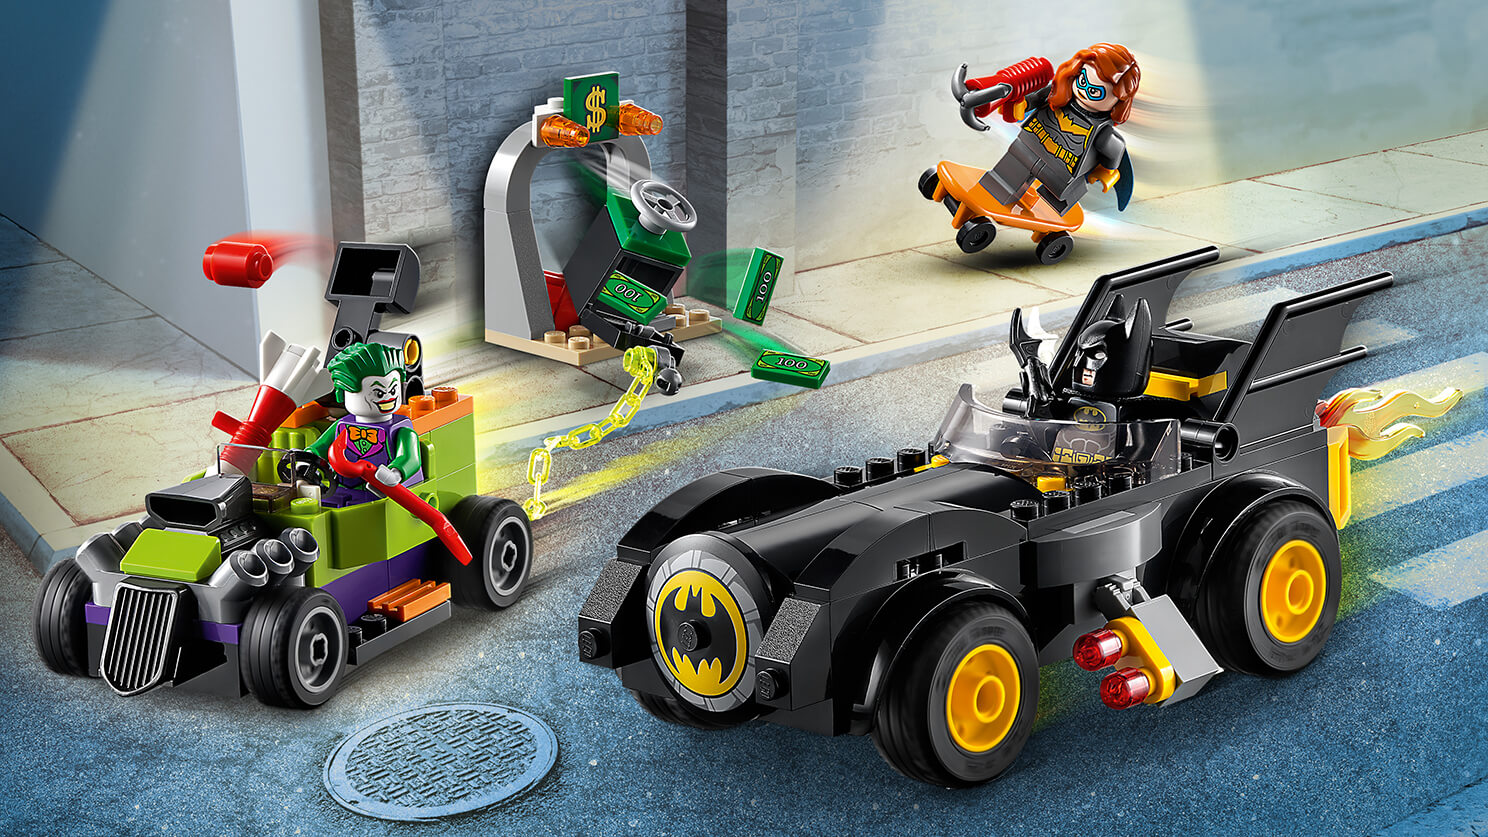 The Lego Batman Movie' builds the hero we deserve - CNET